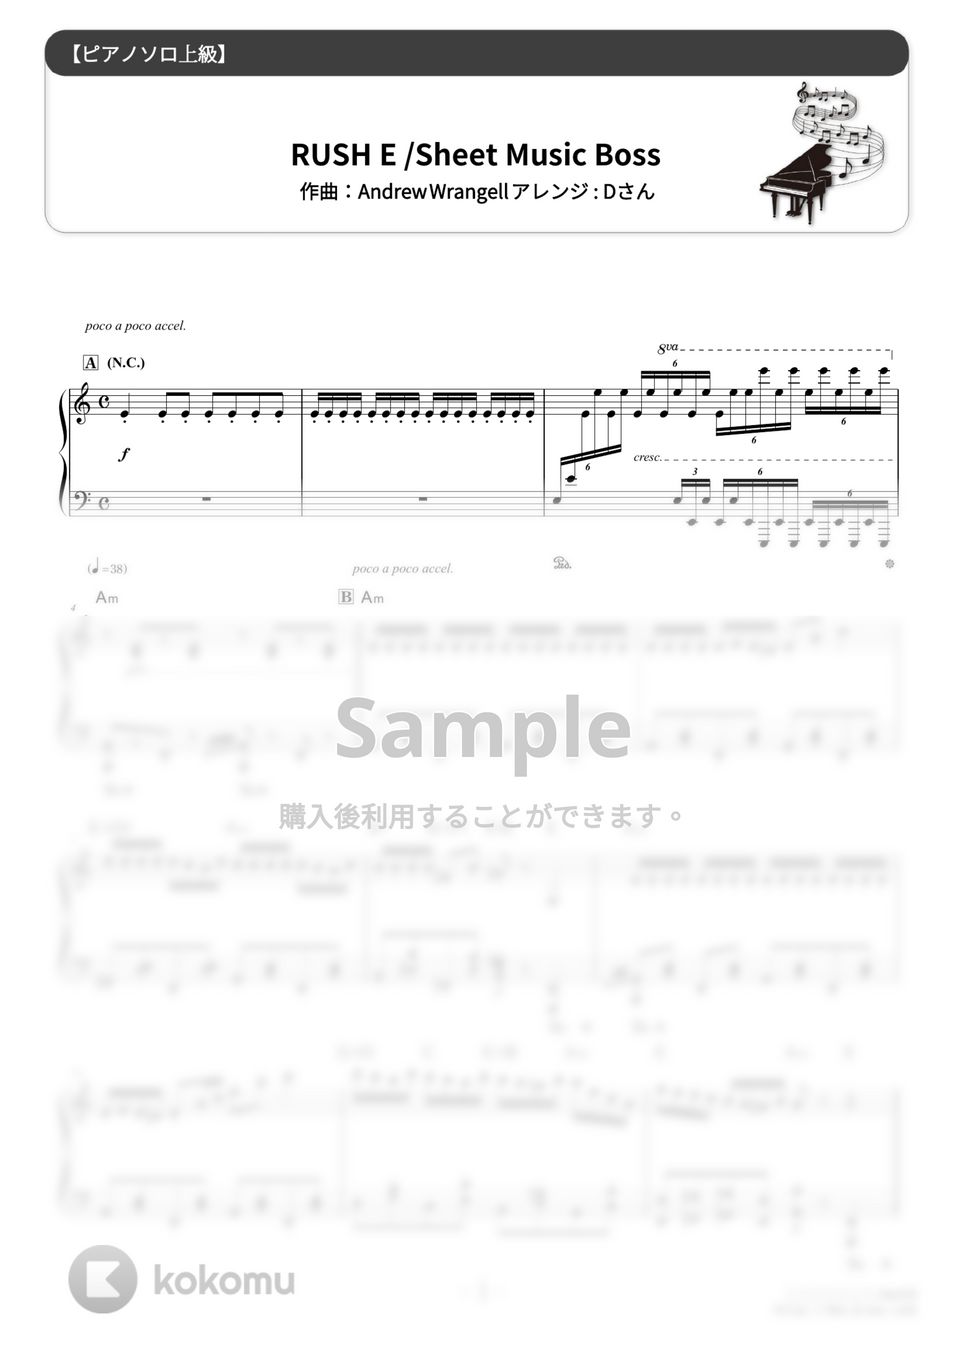 Sheet Music Boss - RUSH E (難易度:★★★★★/コード・ペダル付き) by Dさん